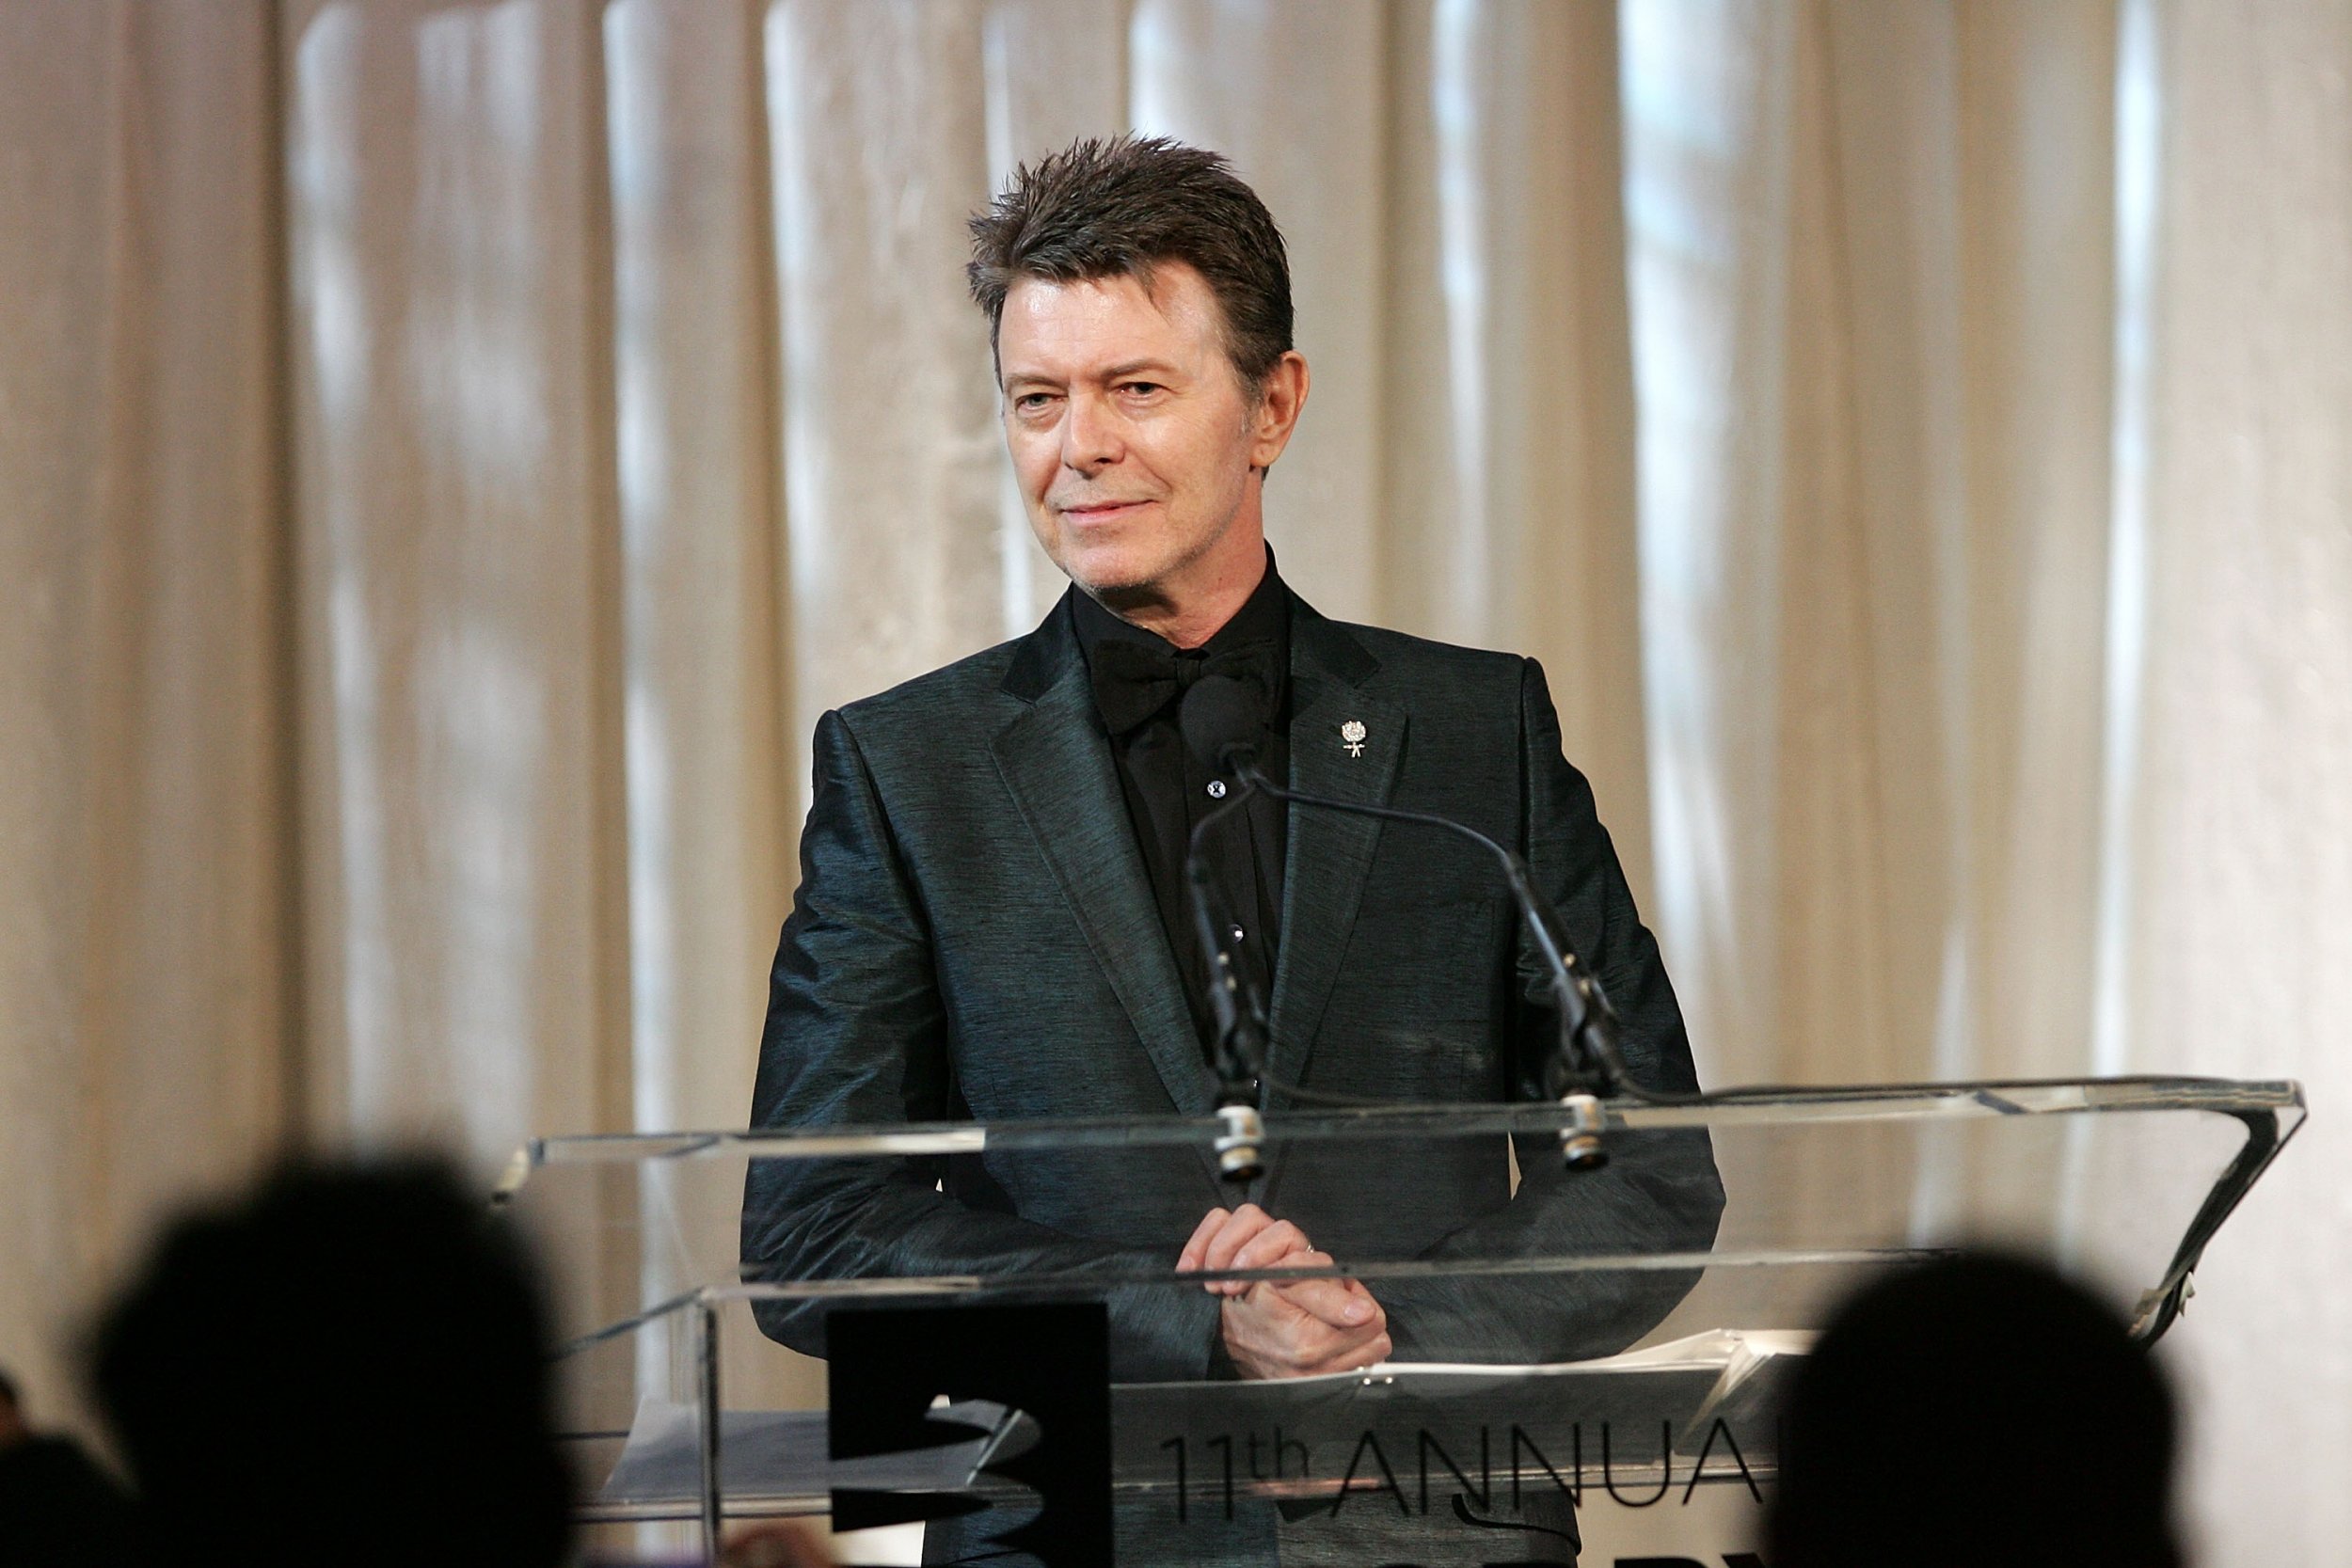 David Bowie in 2007